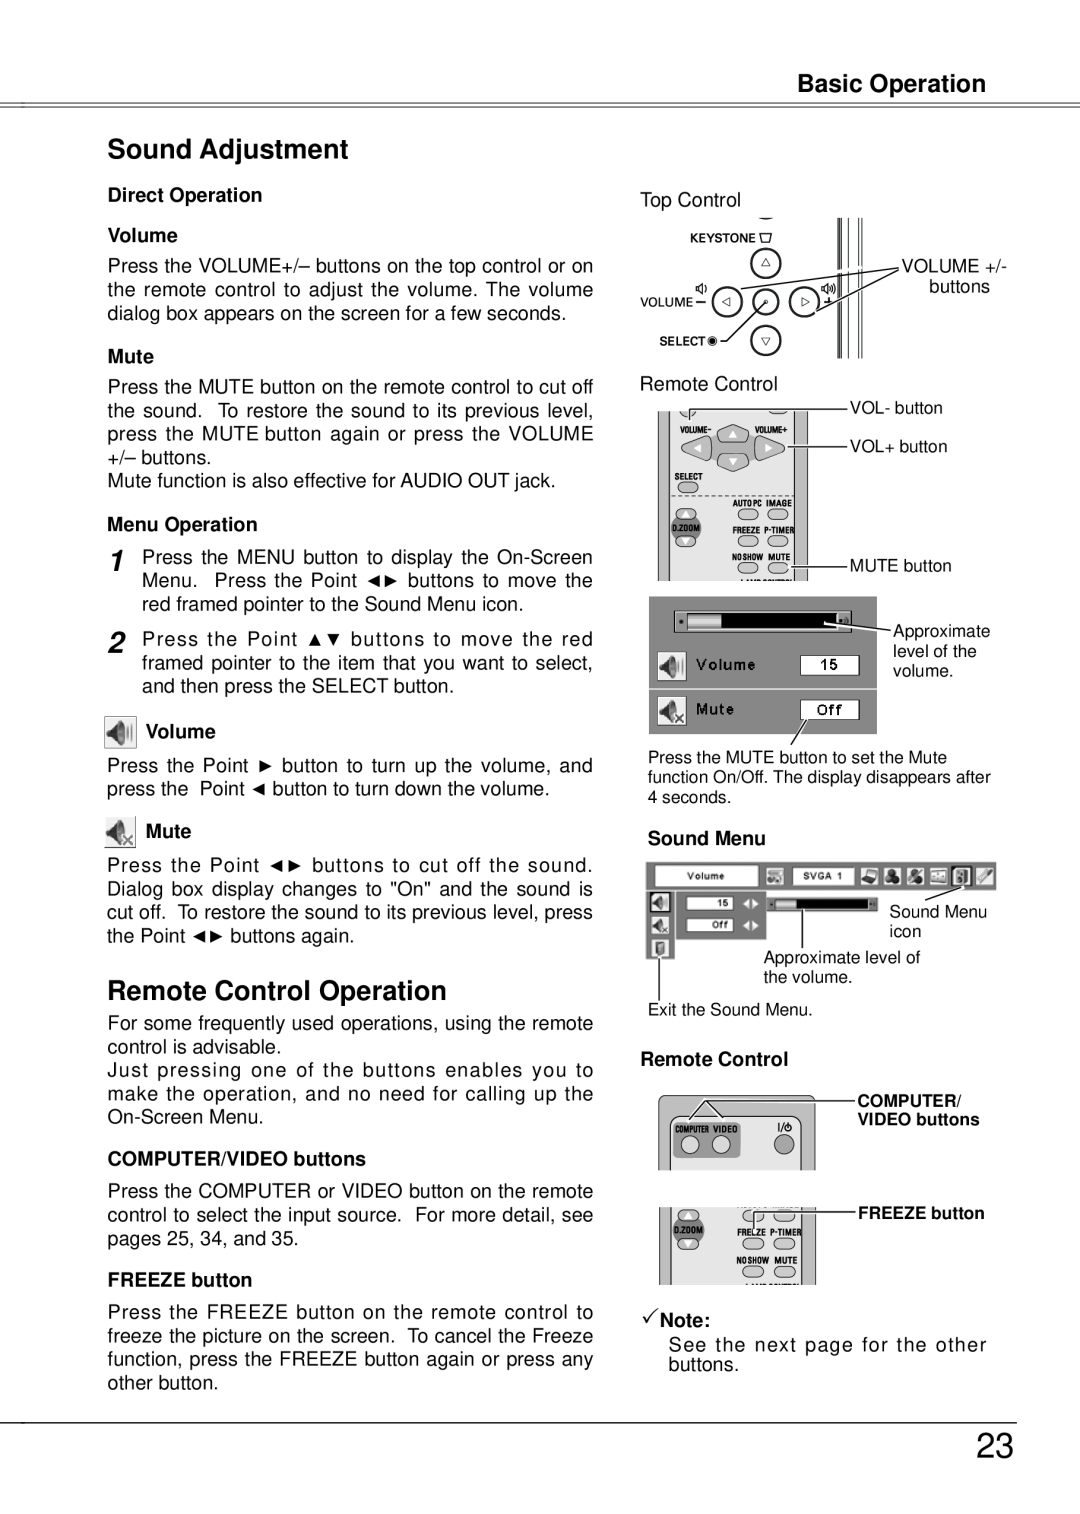 Eiki LC-XB21A Sound Adjustment, Remote Control Operation, Basic Operation, Direct Operation Volume, Mute, Menu Operation 